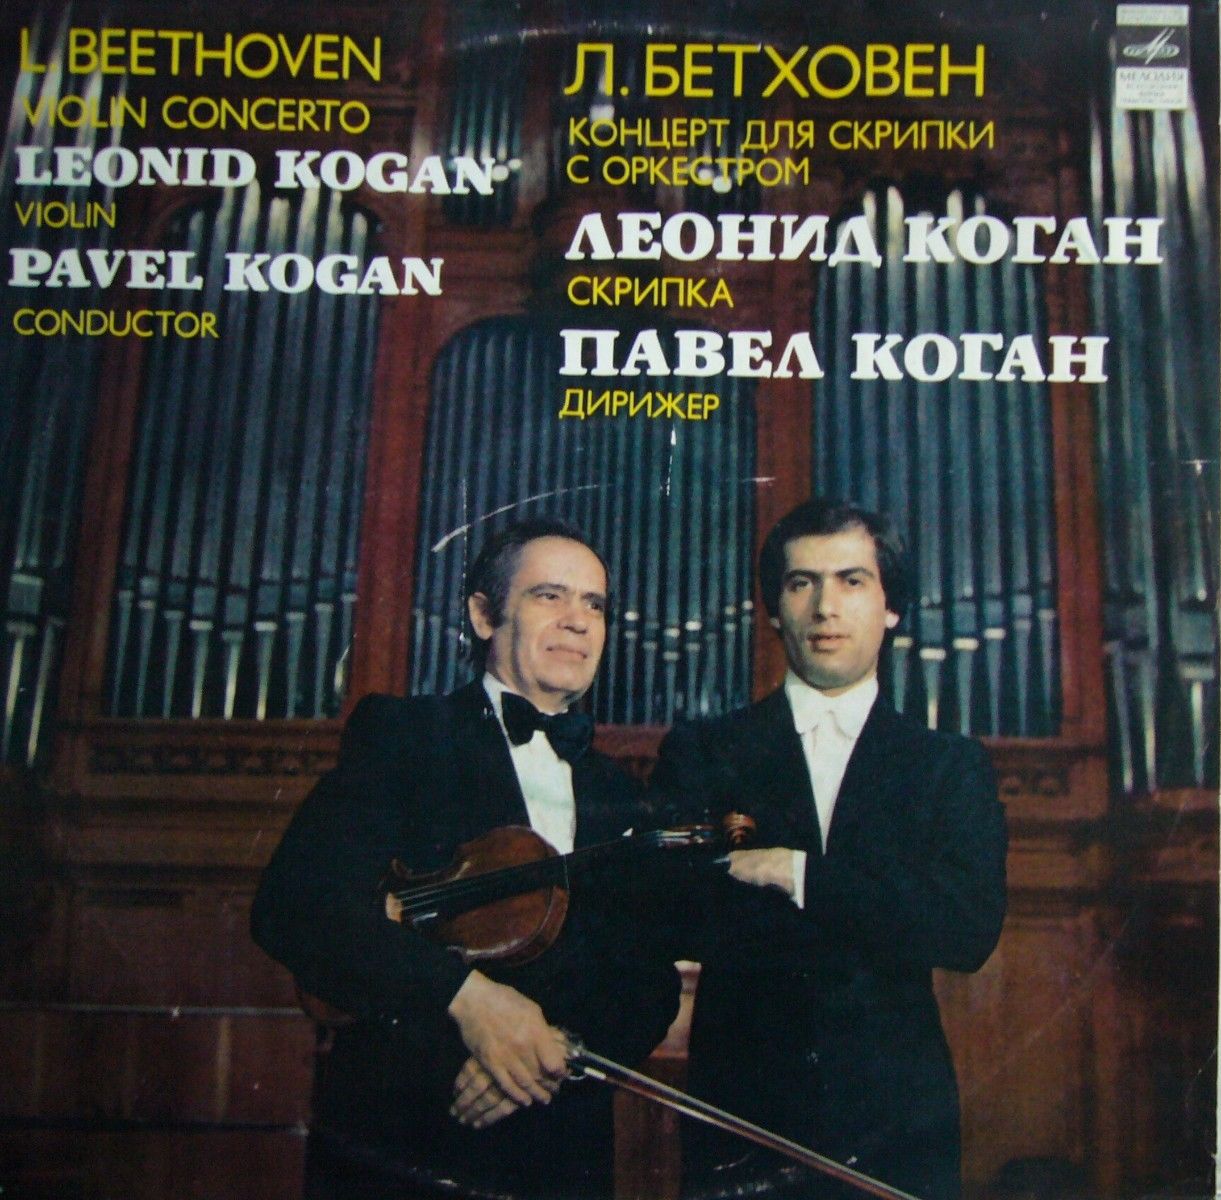 Л. БЕТХОВЕН (1770-1827): Концерт для скрипки с оркестром ре мажор, соч. 61 (Л. Коган, П. Коган)